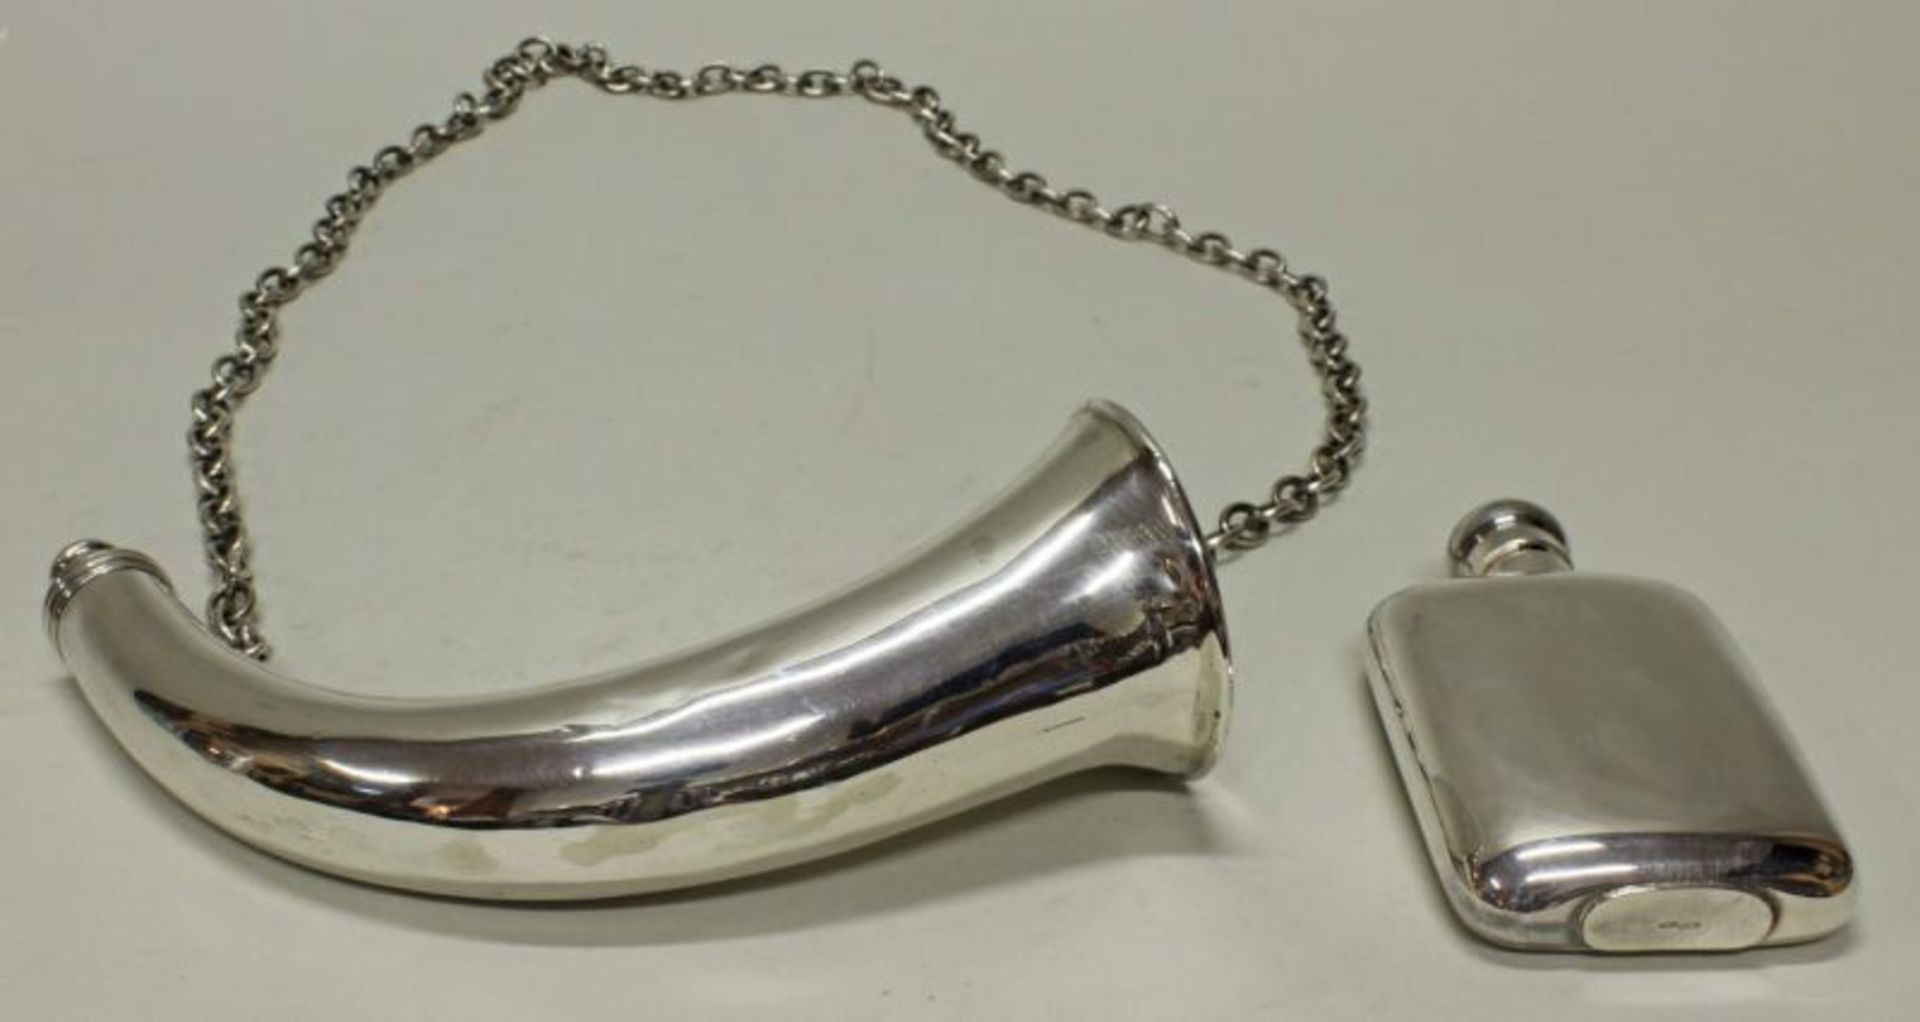 Flachmann, Silber 925, Dublin, 1847, Trinkhornform, an Kette, 22 cm, gesamt ca. 315 g, wenig